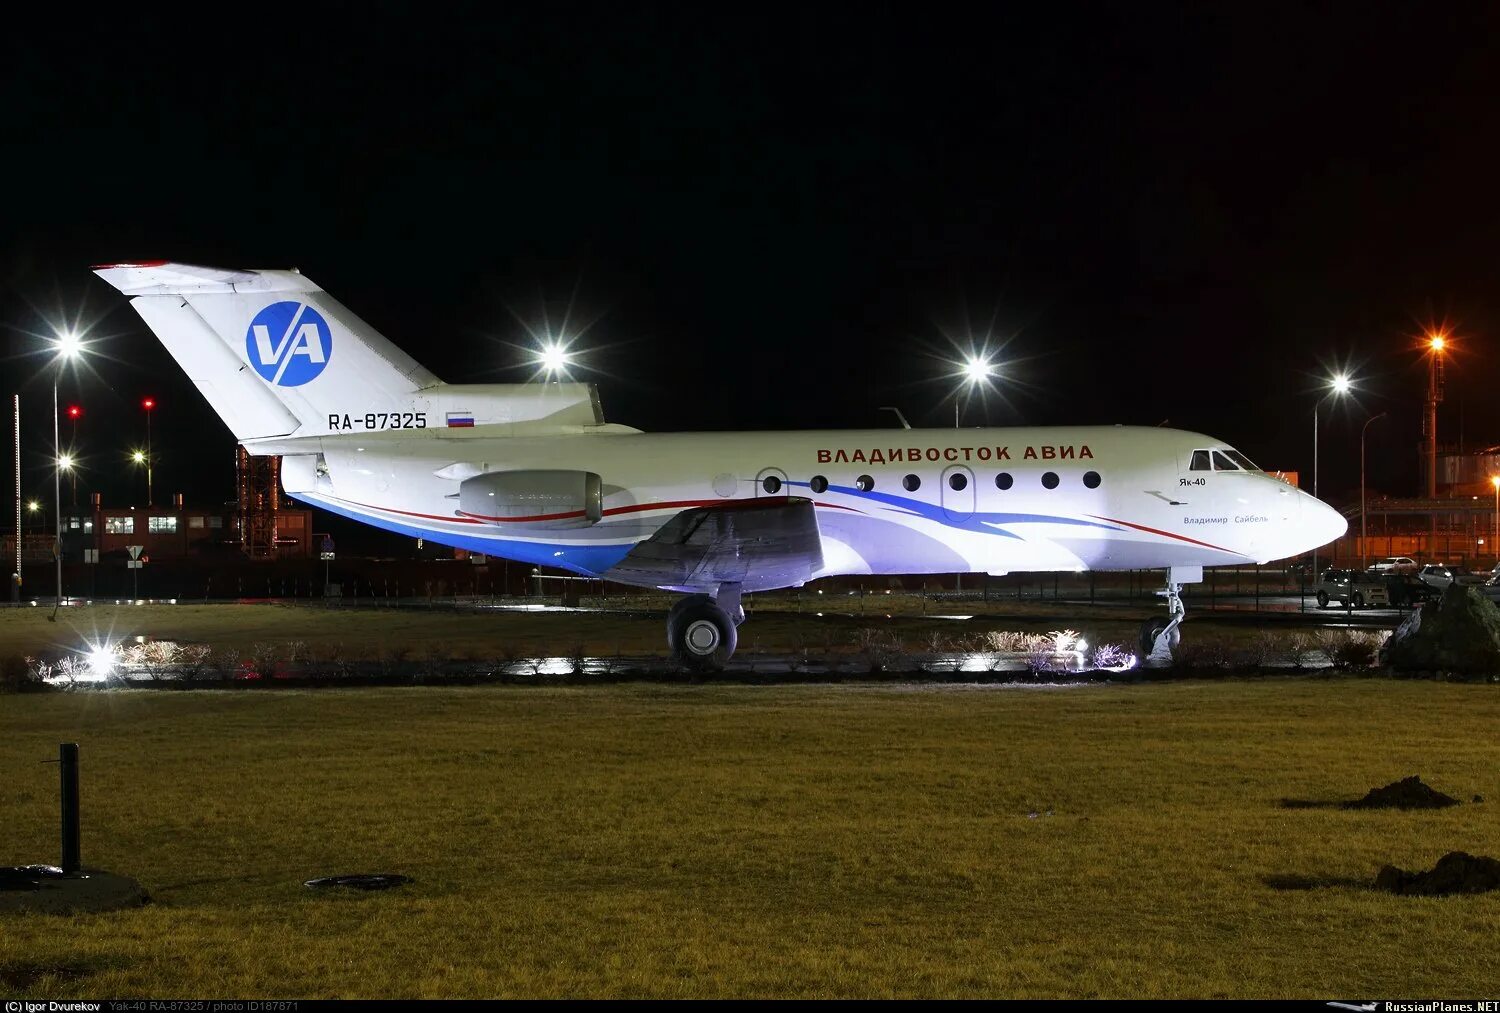 Самолет новокузнецк. Ra-87325. Як 40 ra-88159. Владивосток авиа як-40.